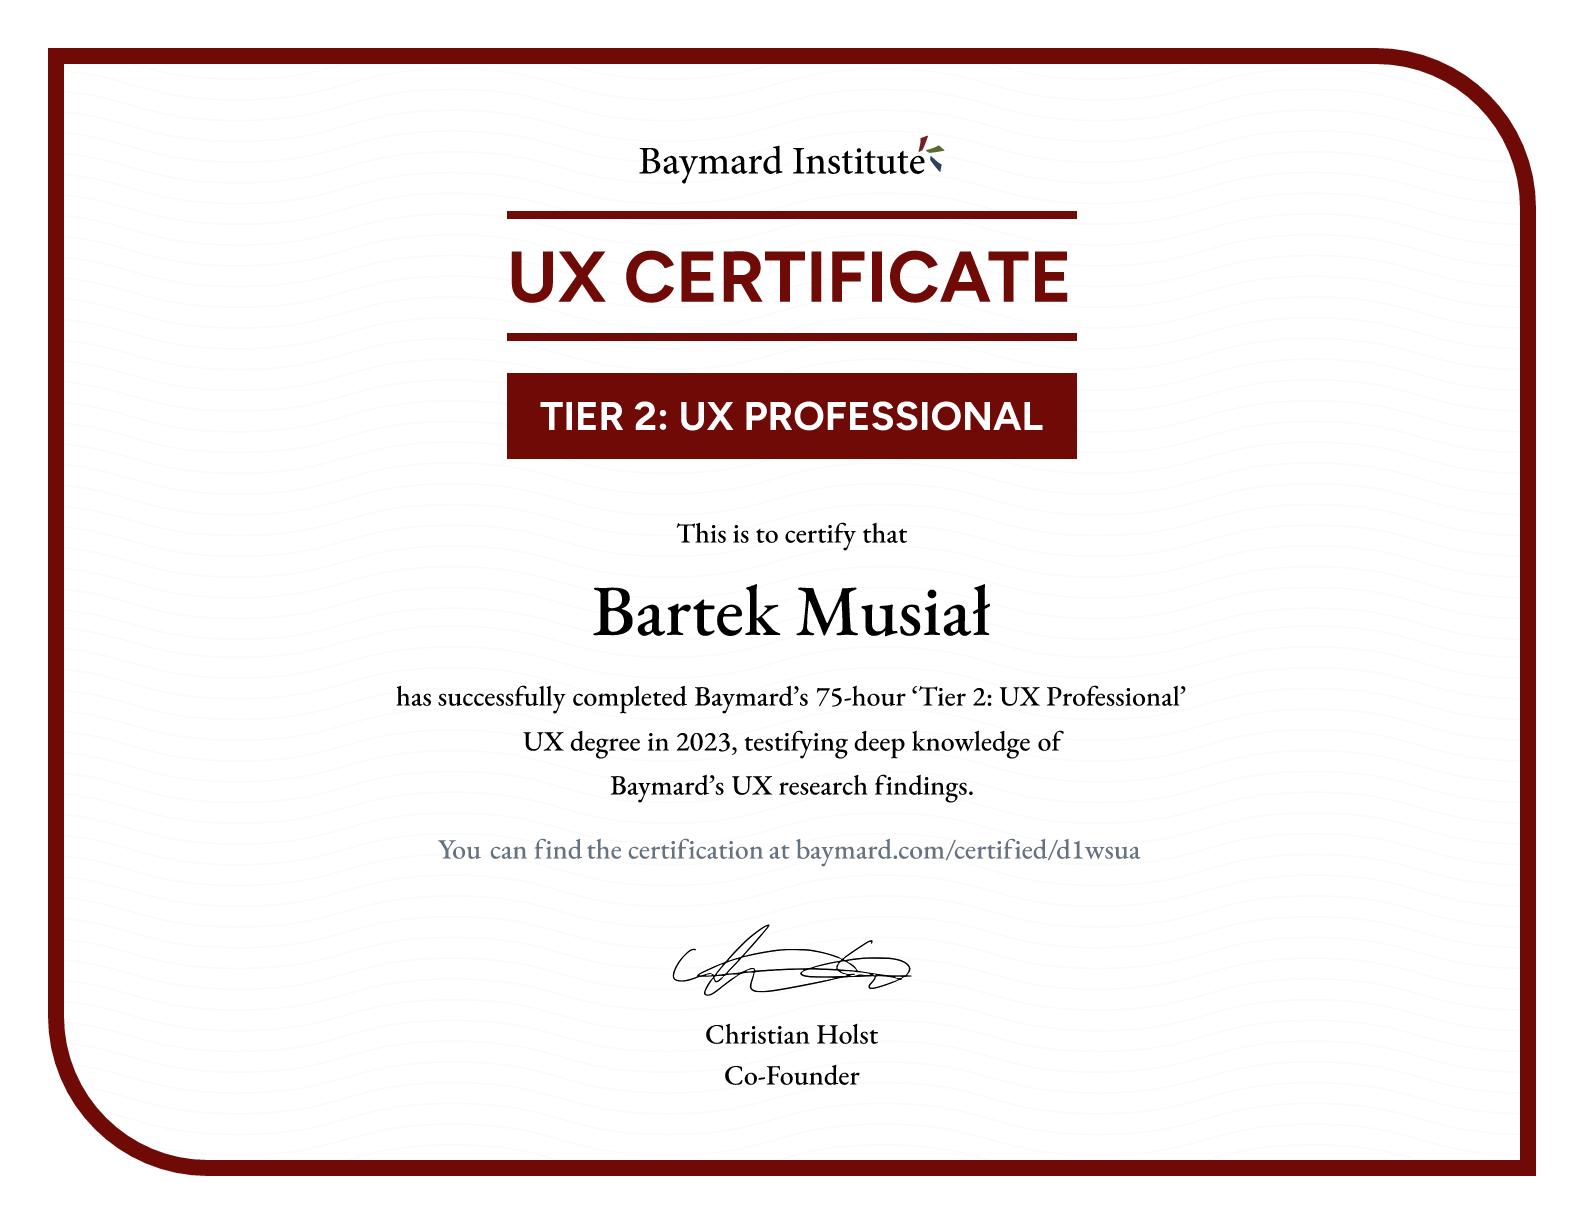 Bartek Musiał’s certificate